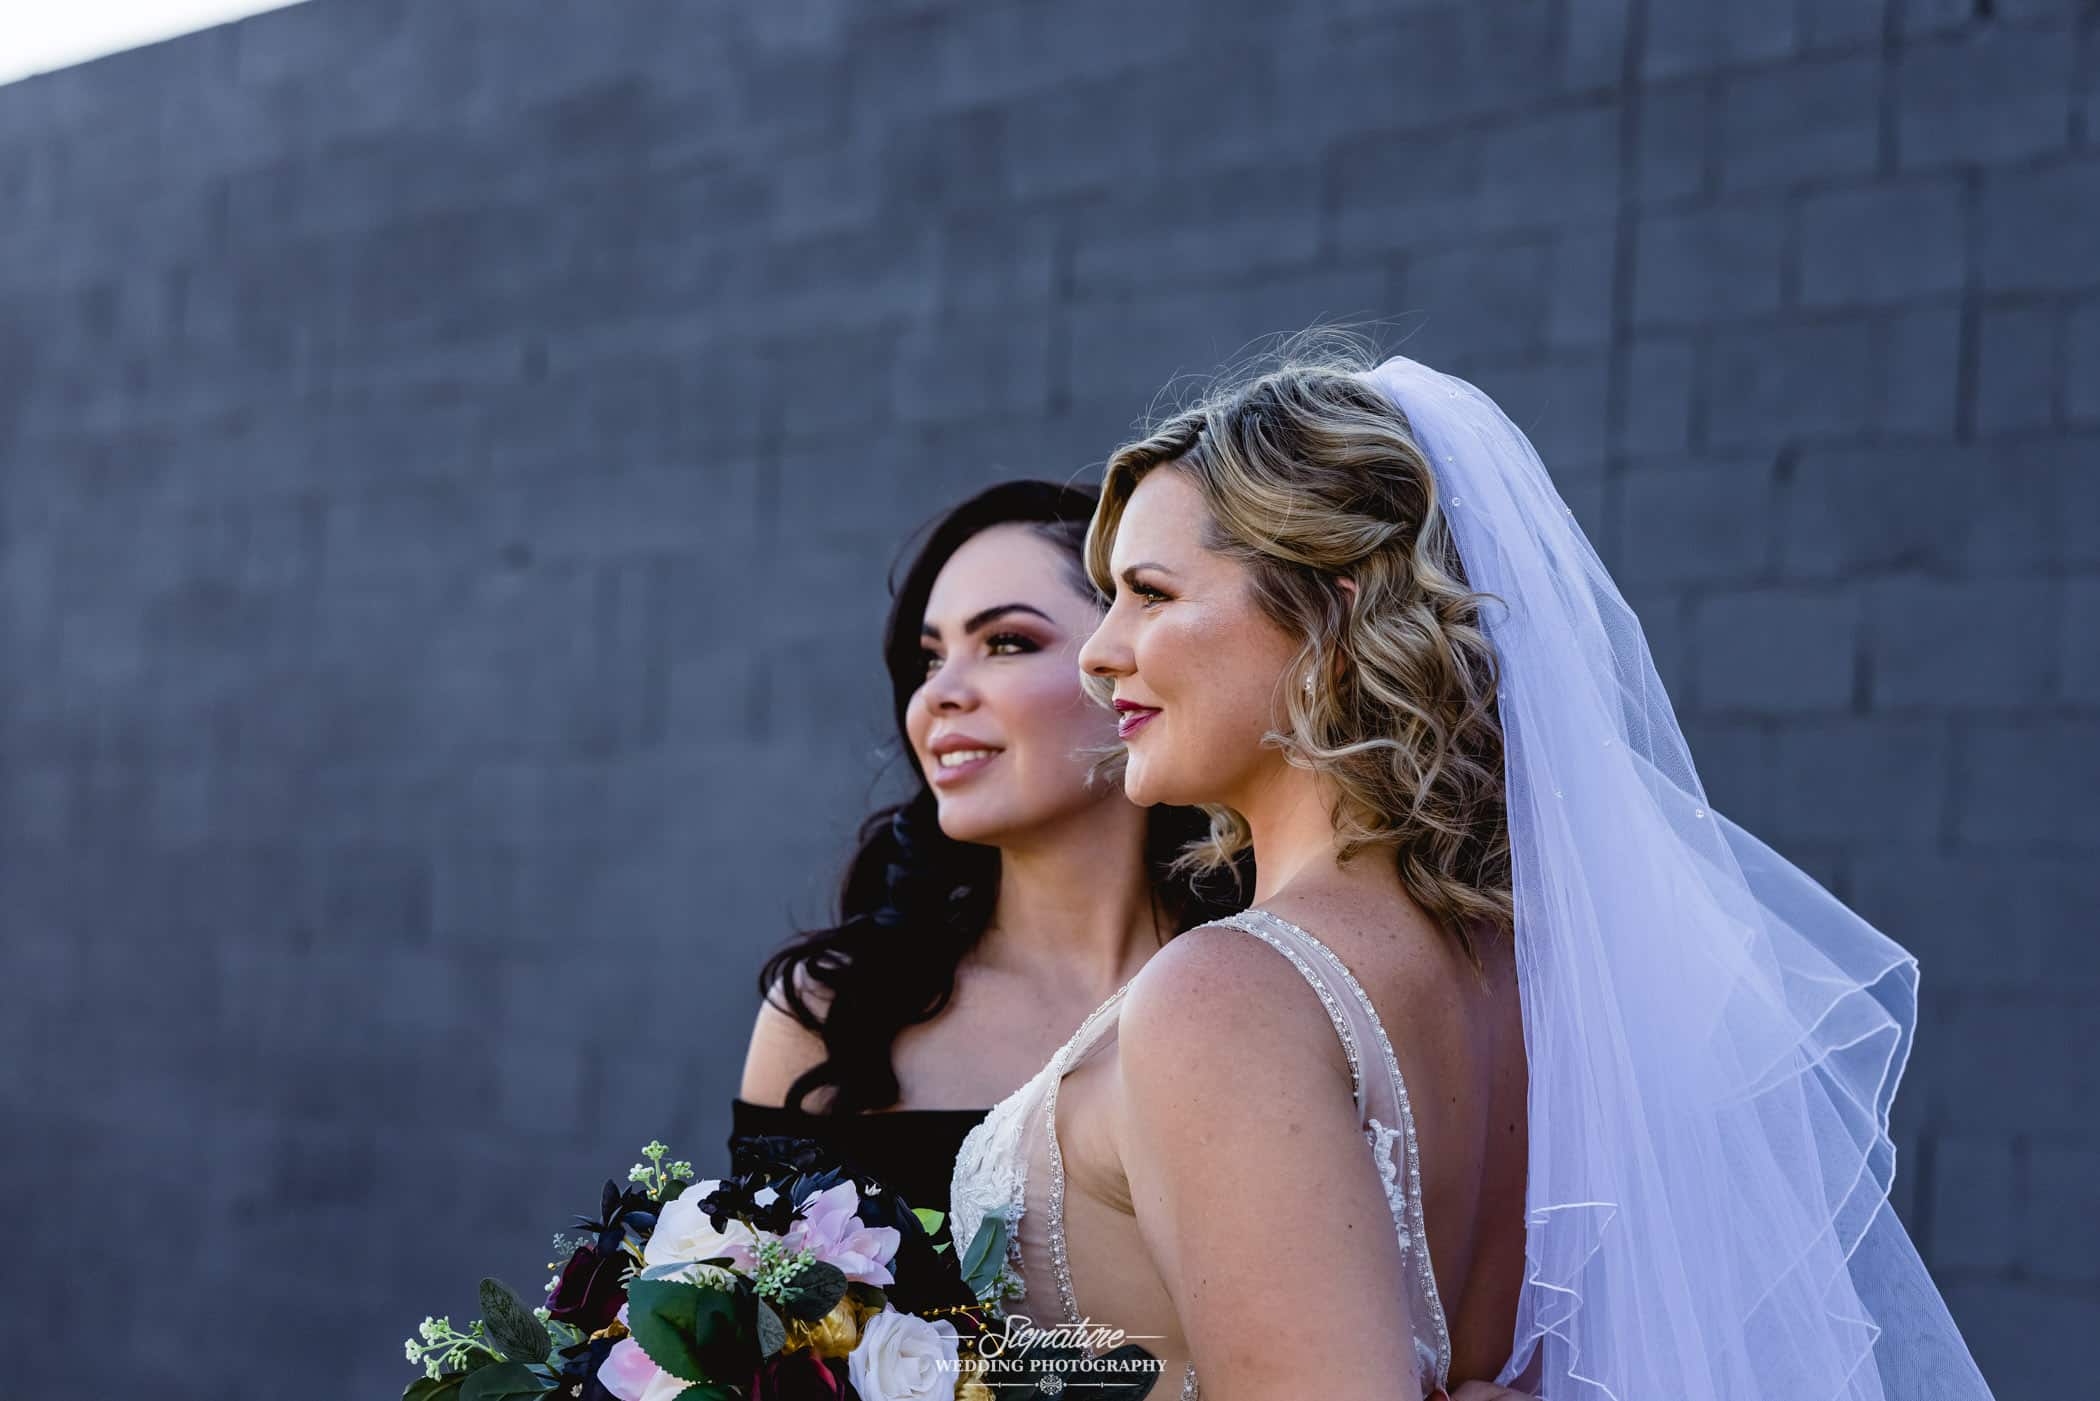 Bride and bridesmaid smiling